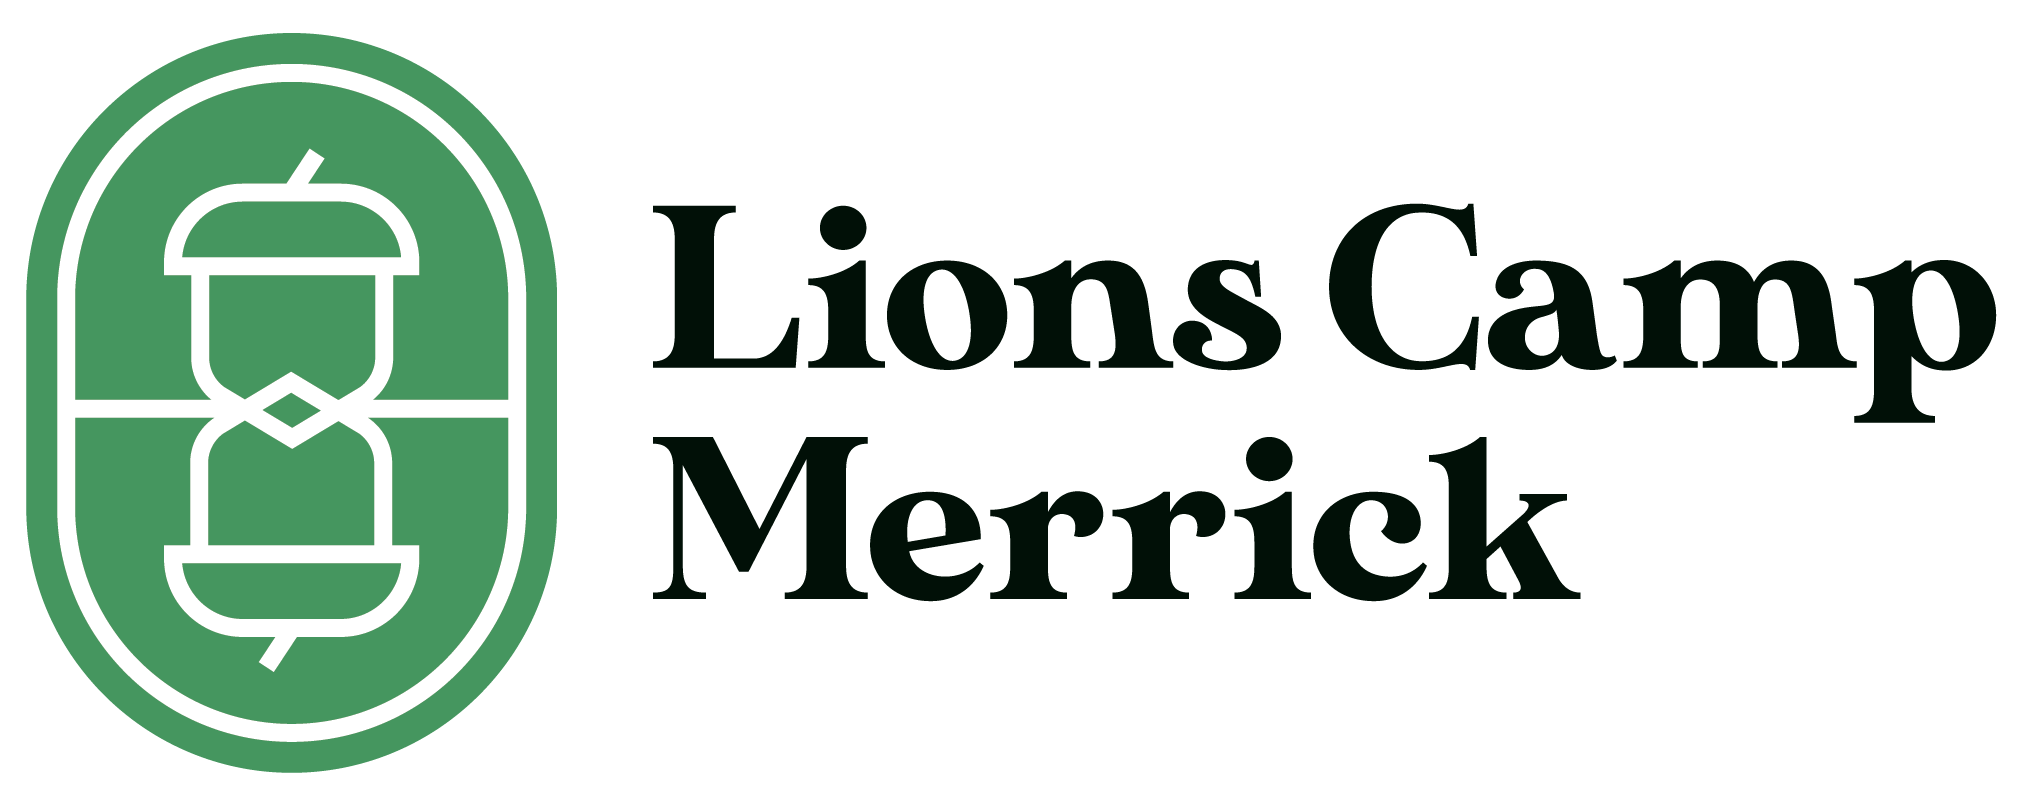 Lions Camp Merrick